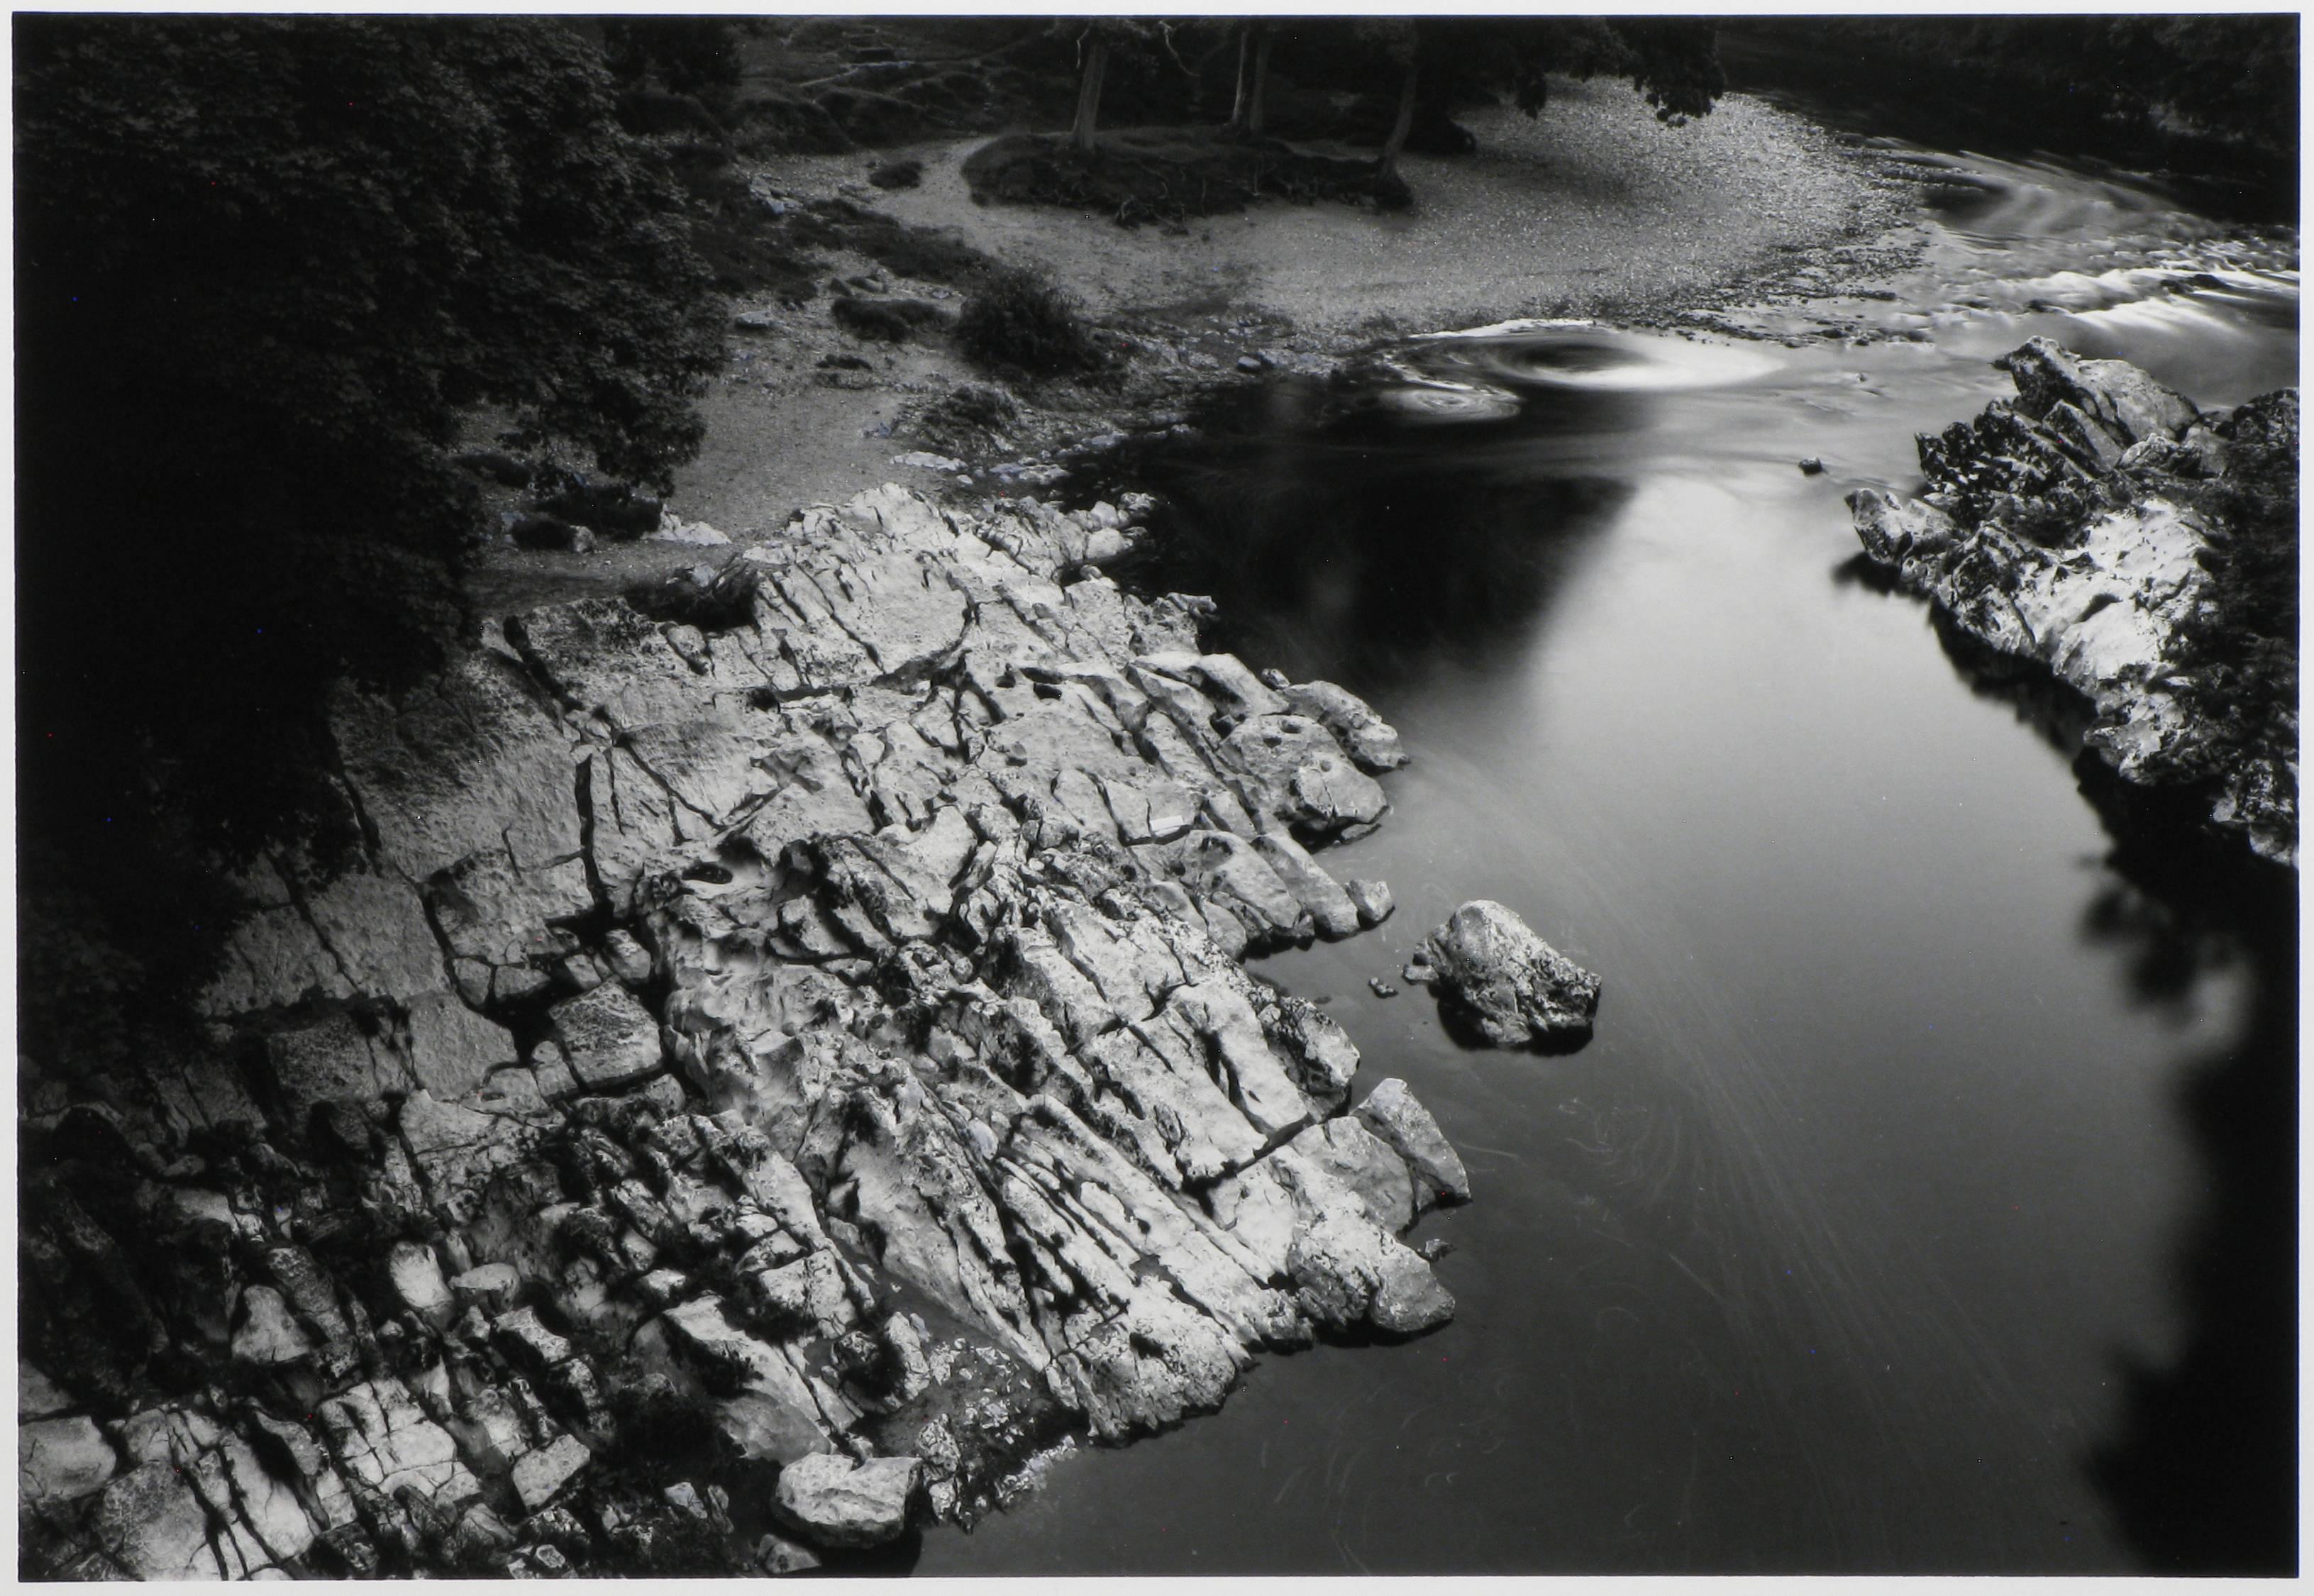 Edward Ranney Black and White Photograph - River Lune, Cumbria, England